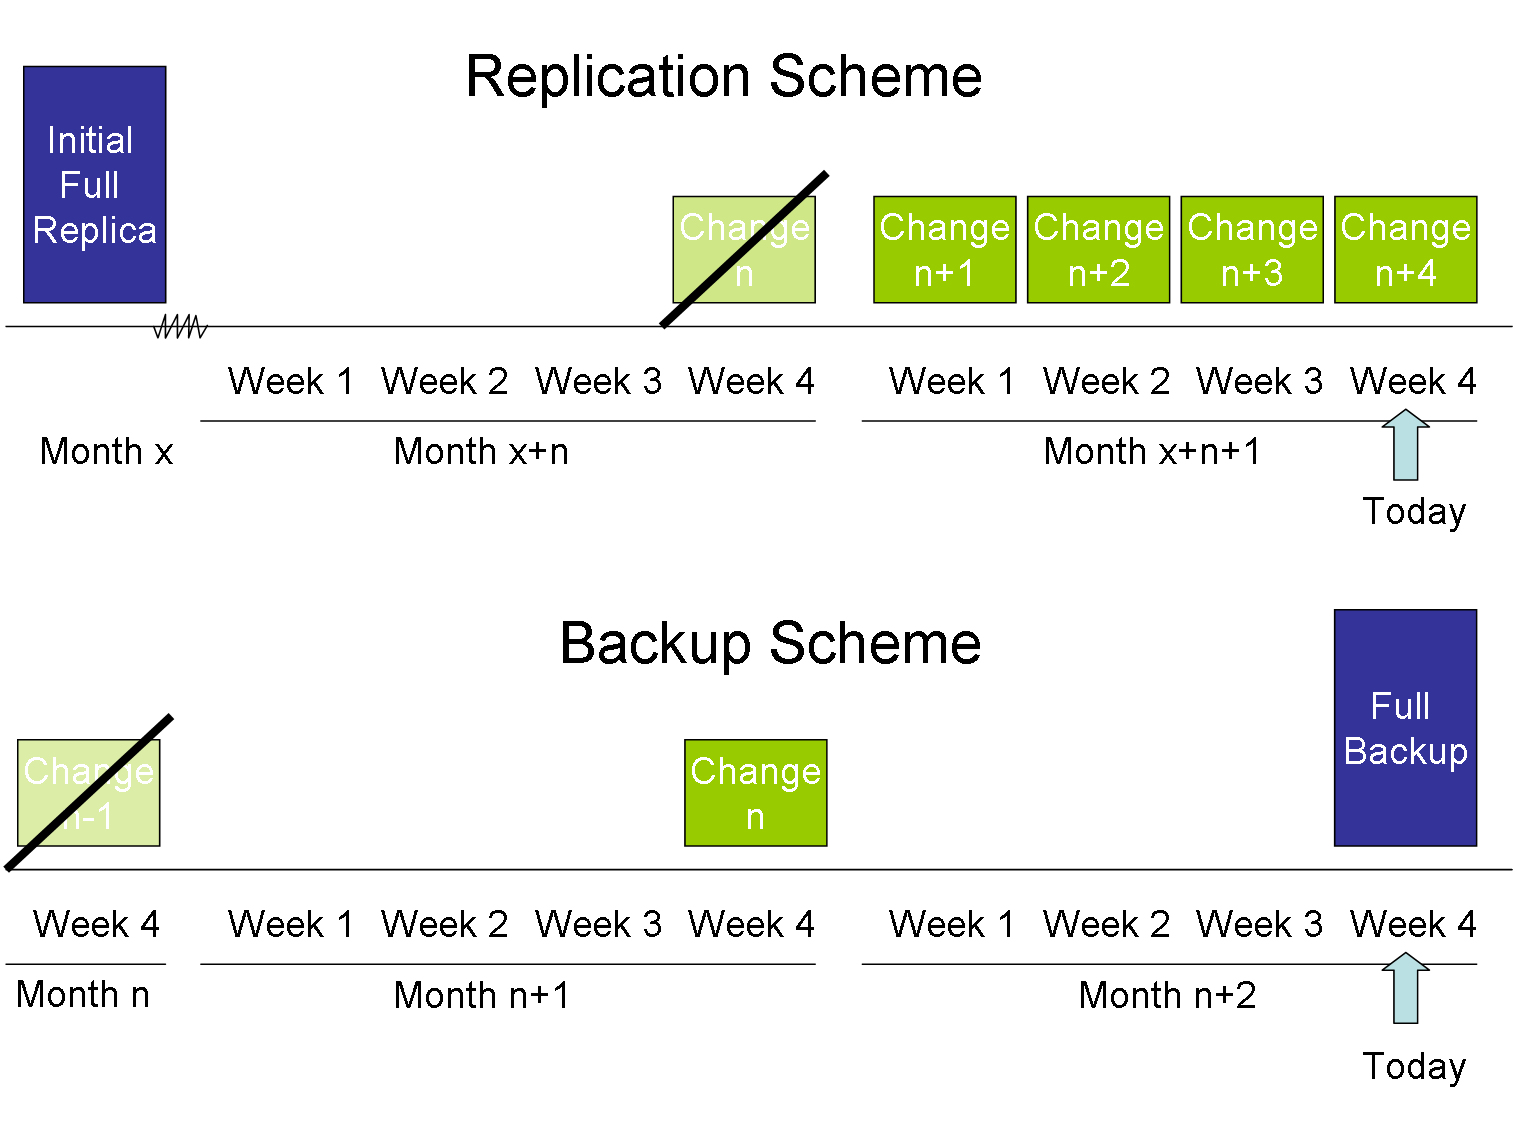 Replication&BackupScheme.png